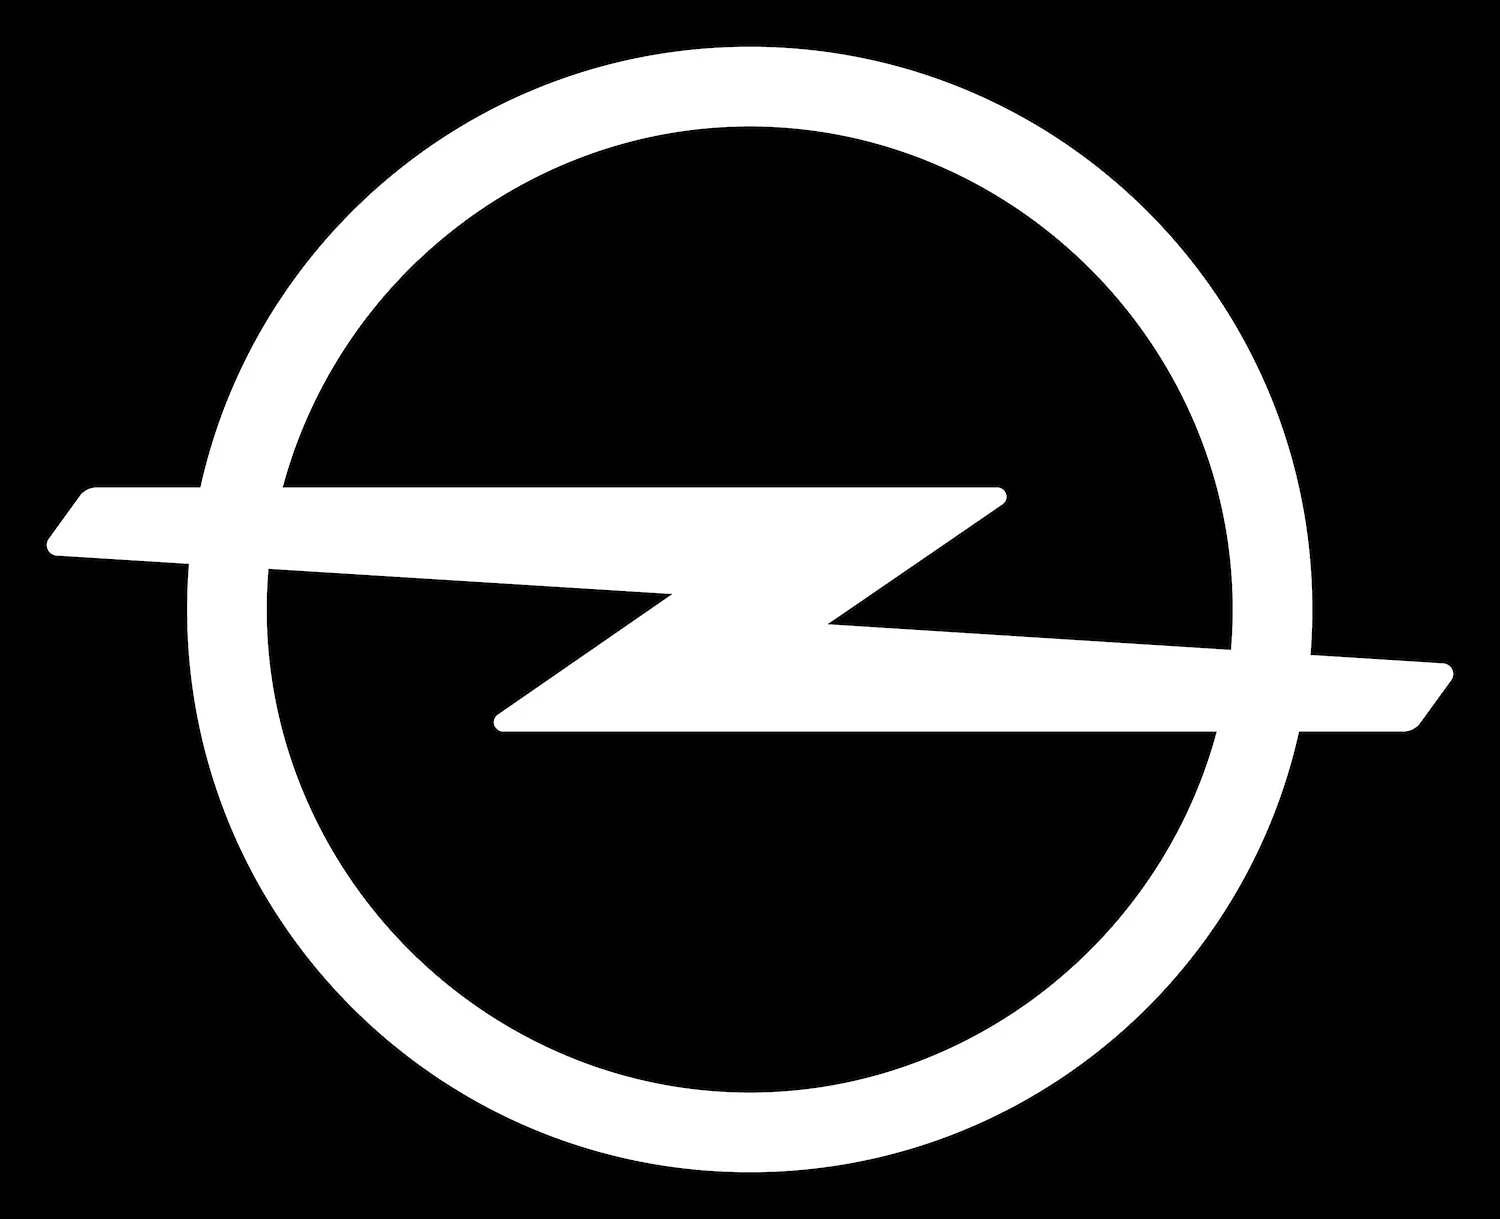 Opel логотип